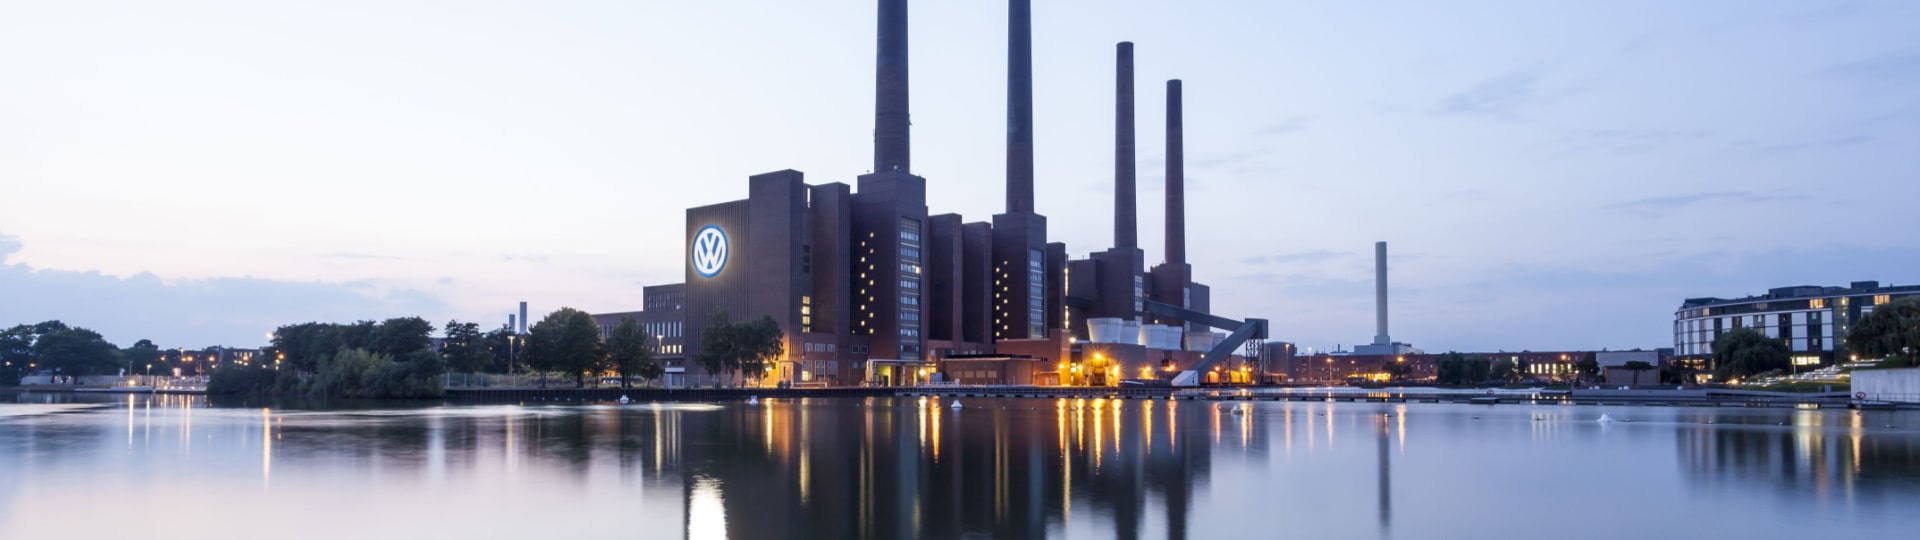 Zisk Volkswagenu zaostal za odhady